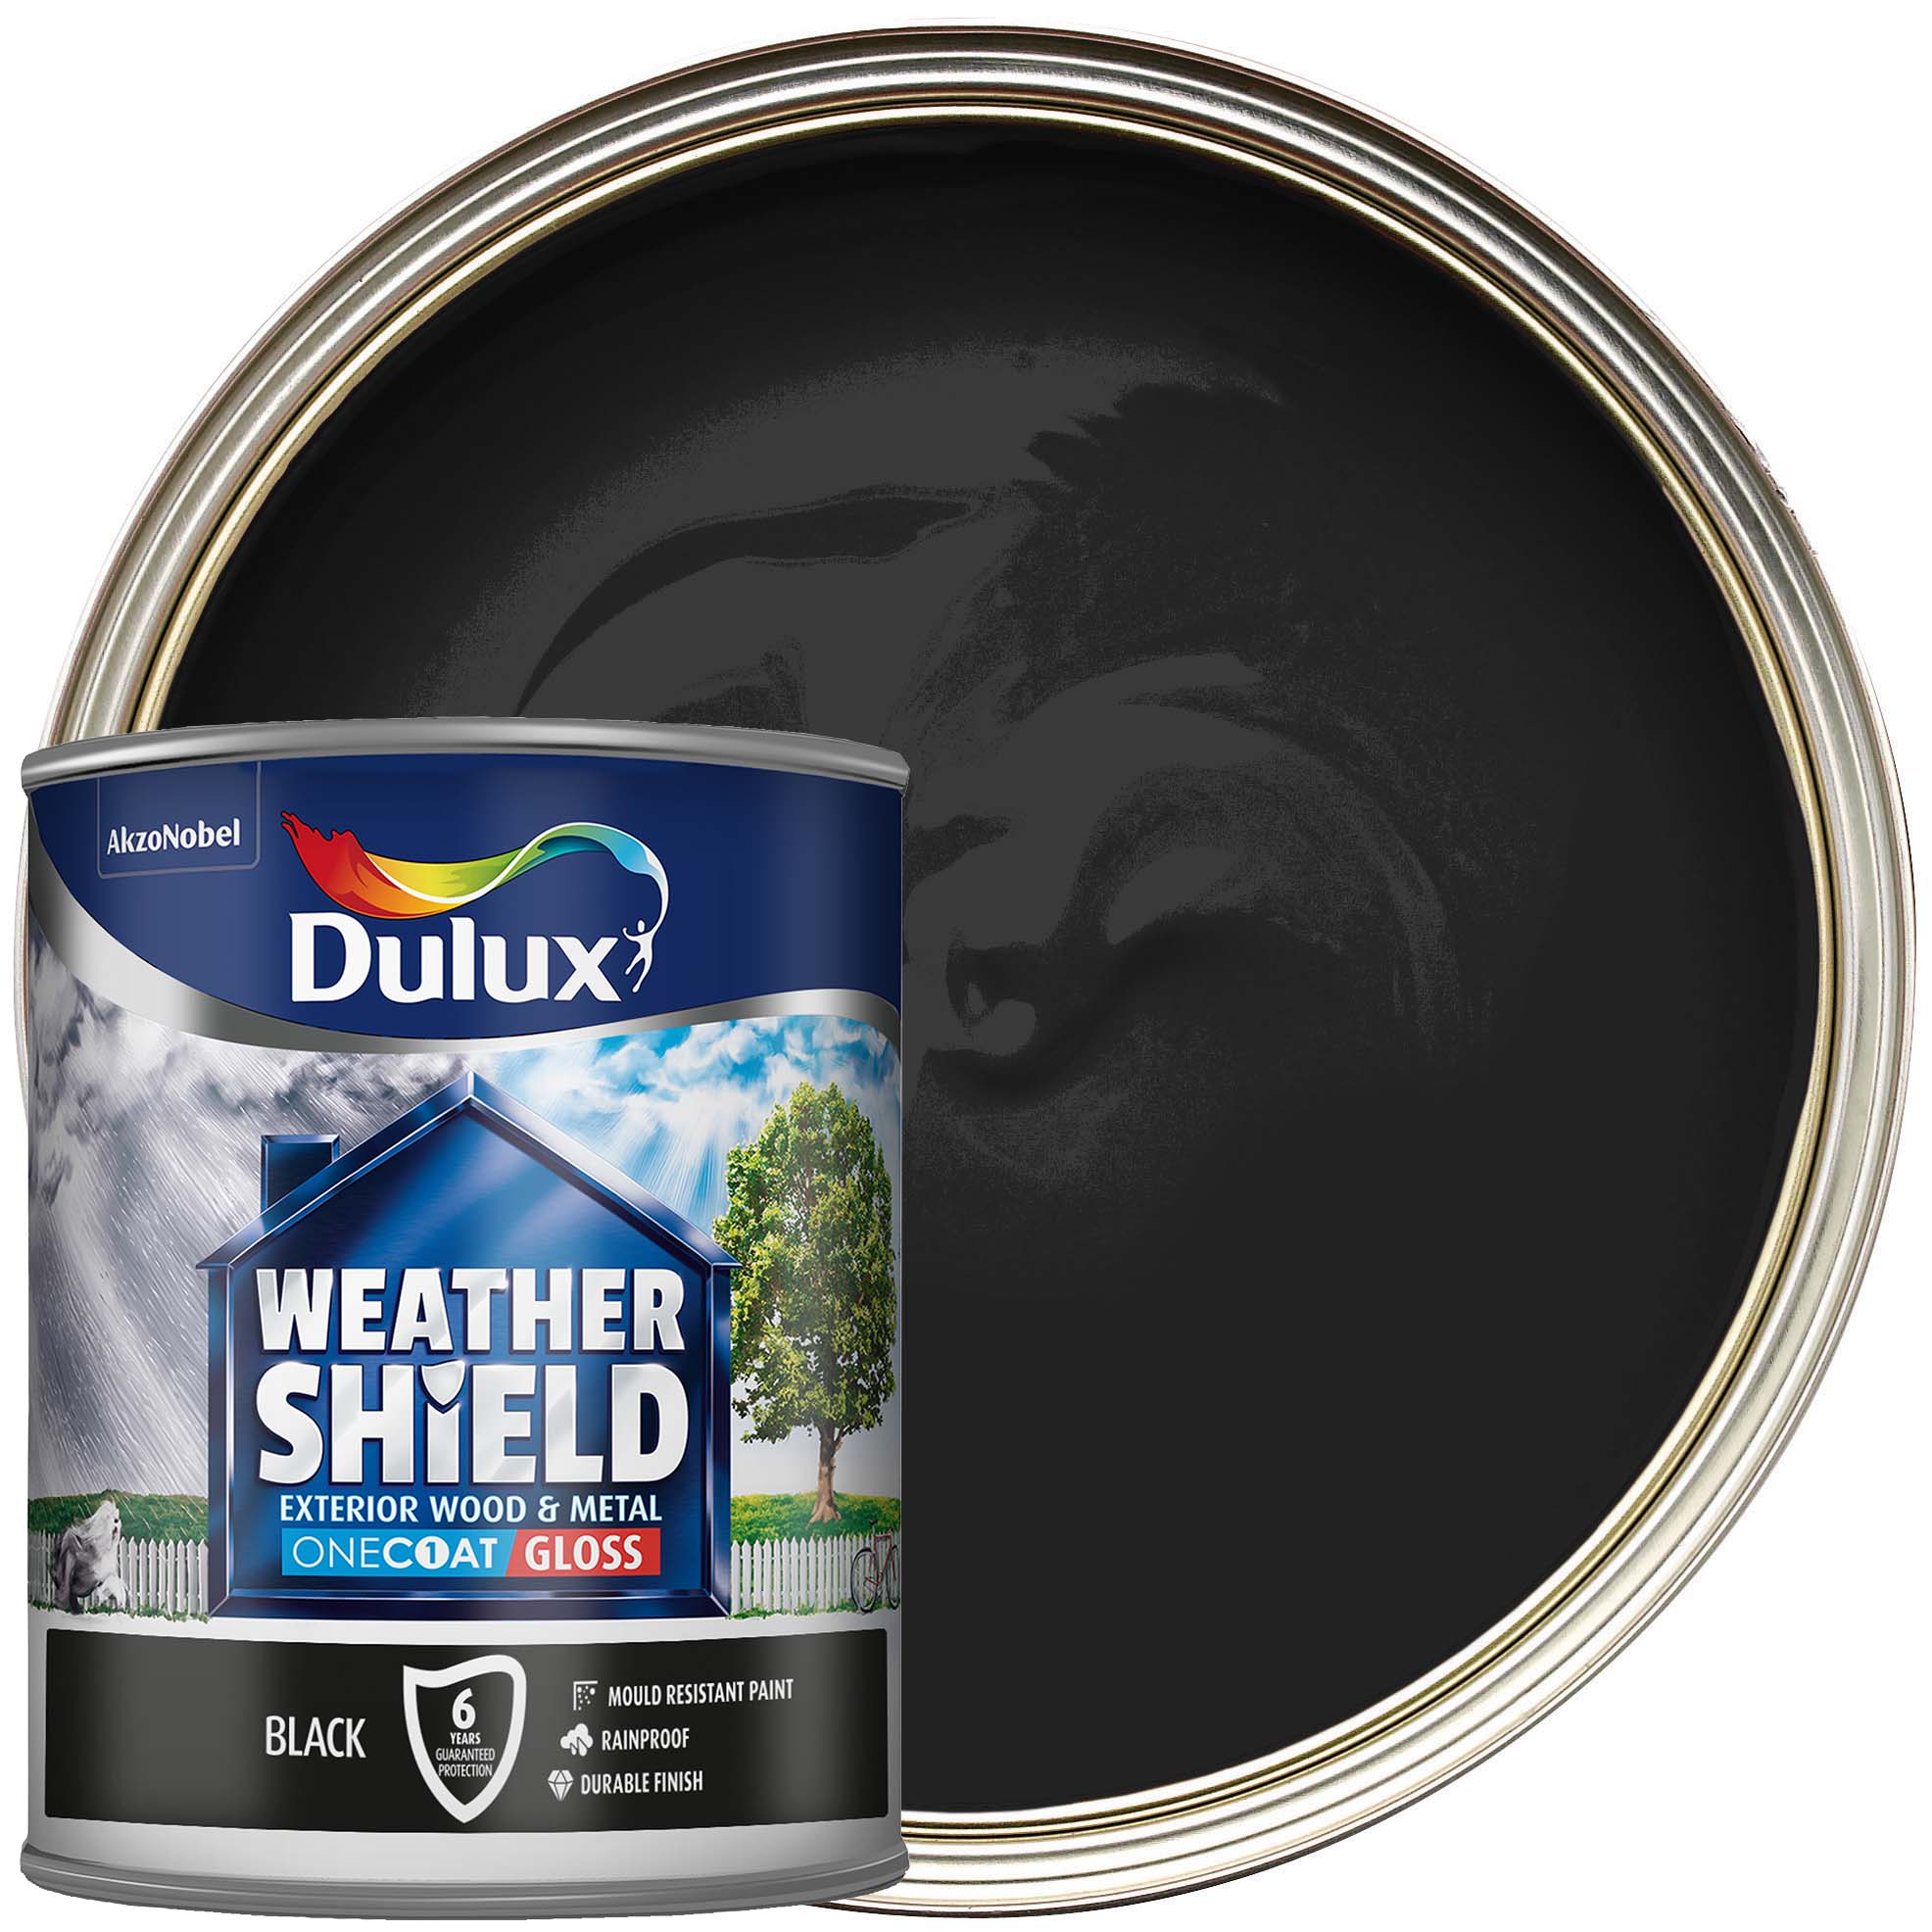 Image of Dulux Weathershield One Coat Gloss Paint - Black - 750ml